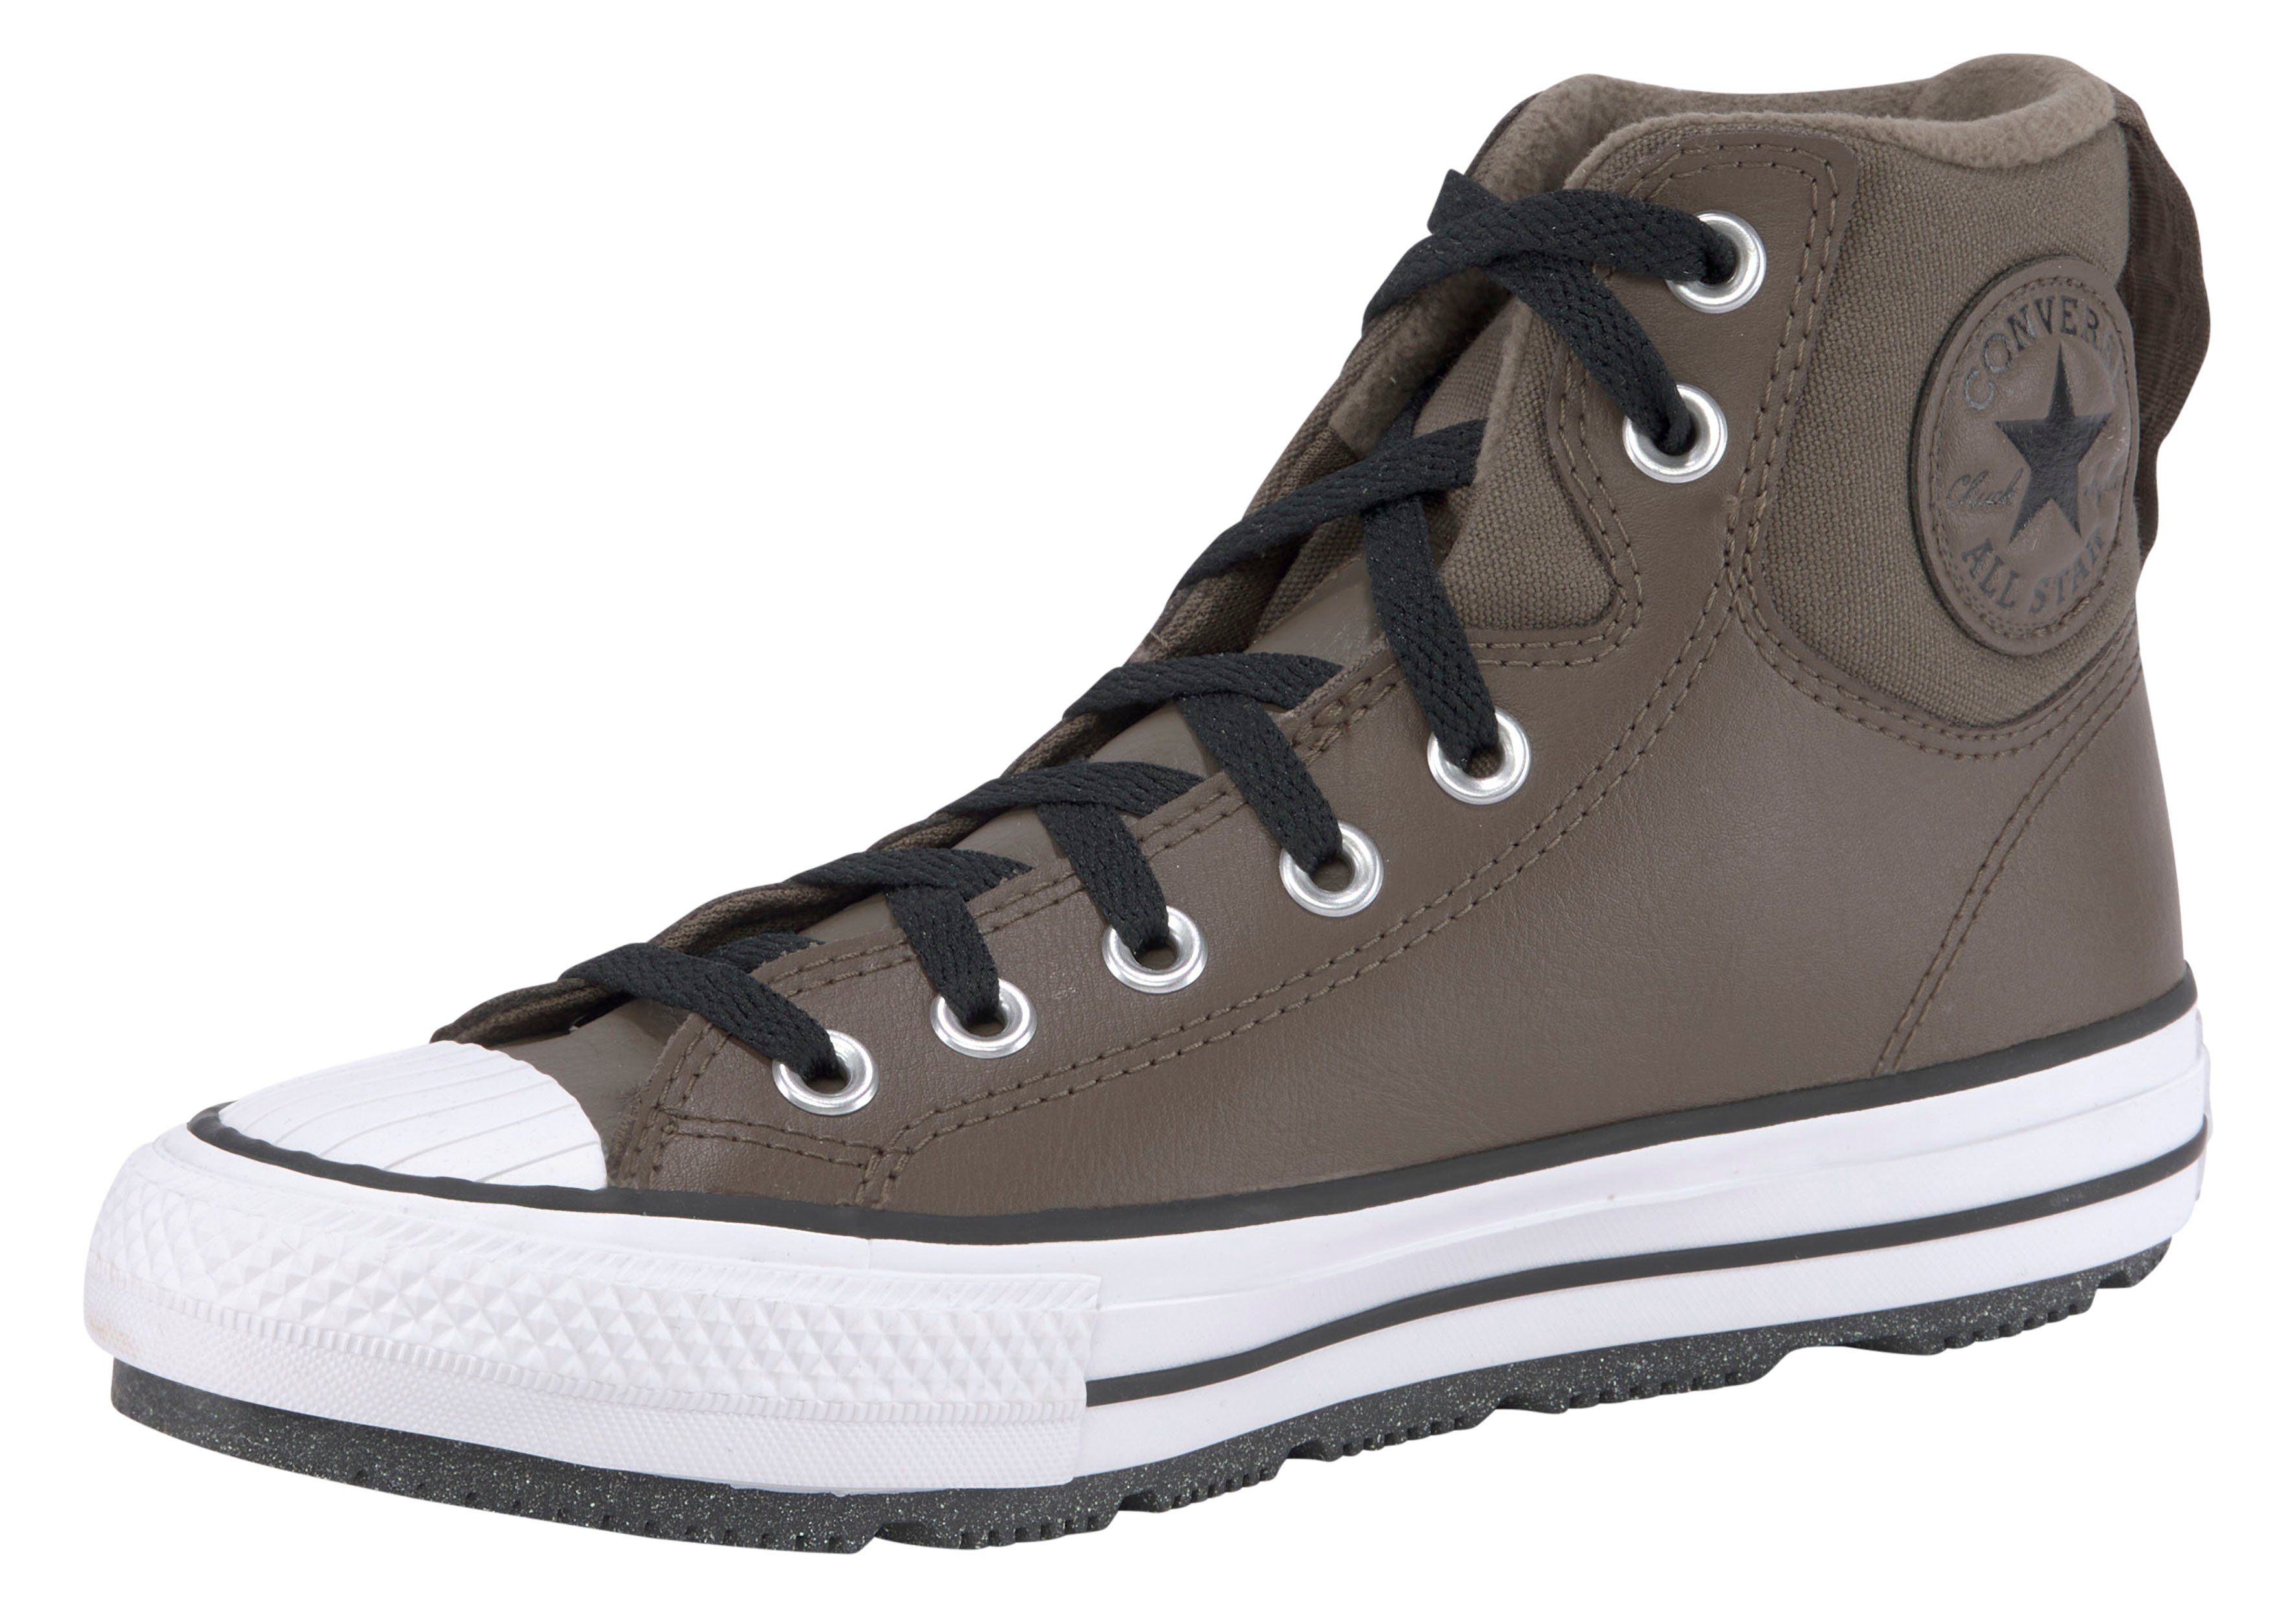 Converse CHUCK TAYLOR ALL STAR BERKSHIRE Sneakerboots Warmfutter | Sneaker high